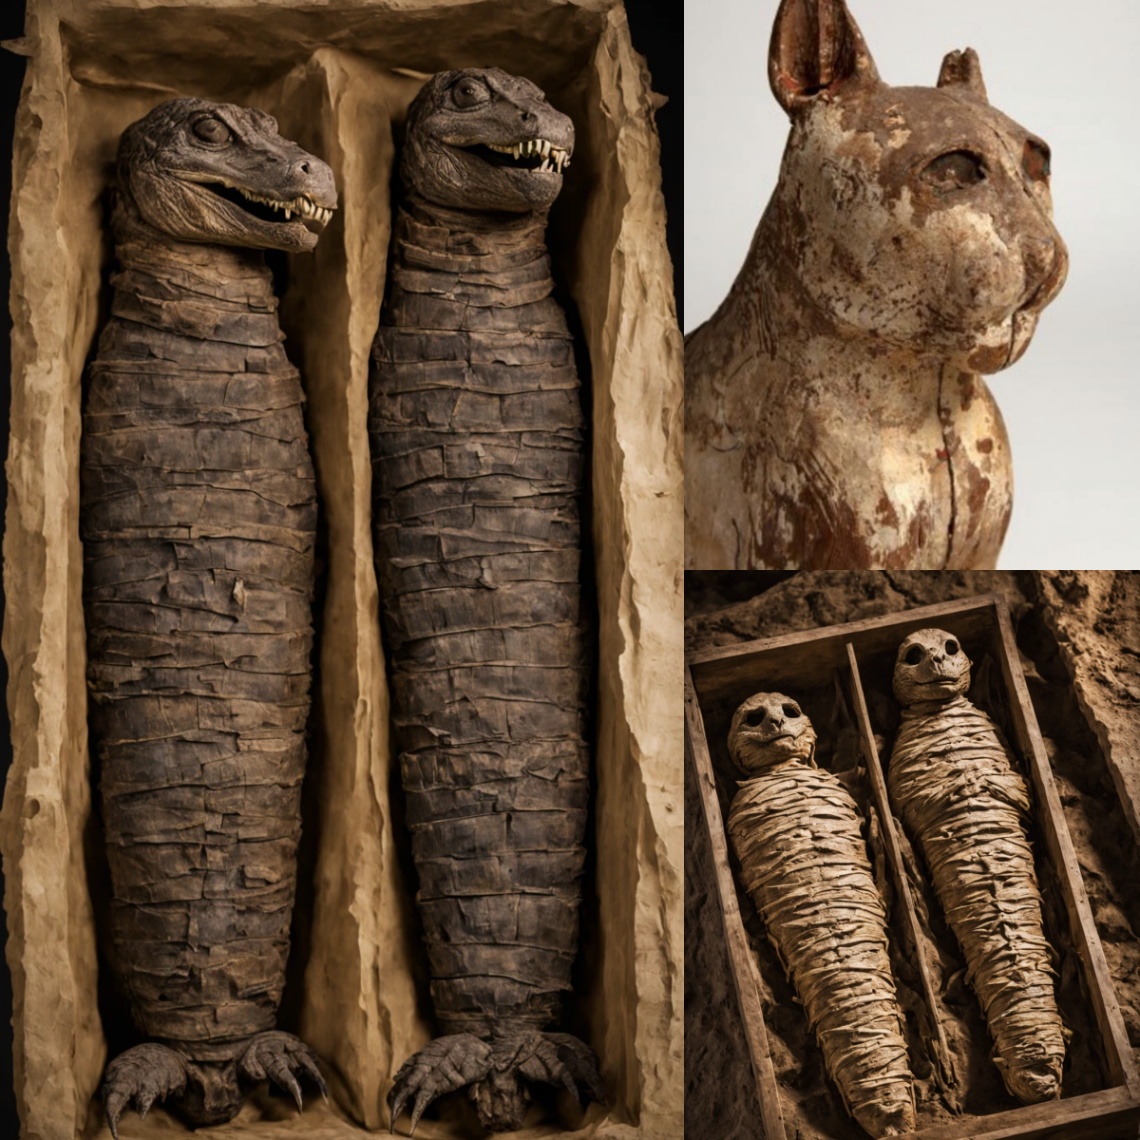 70 Million Mummified Animals in Egypt Reveal Dark Secret of Ancient Mummy Industry 